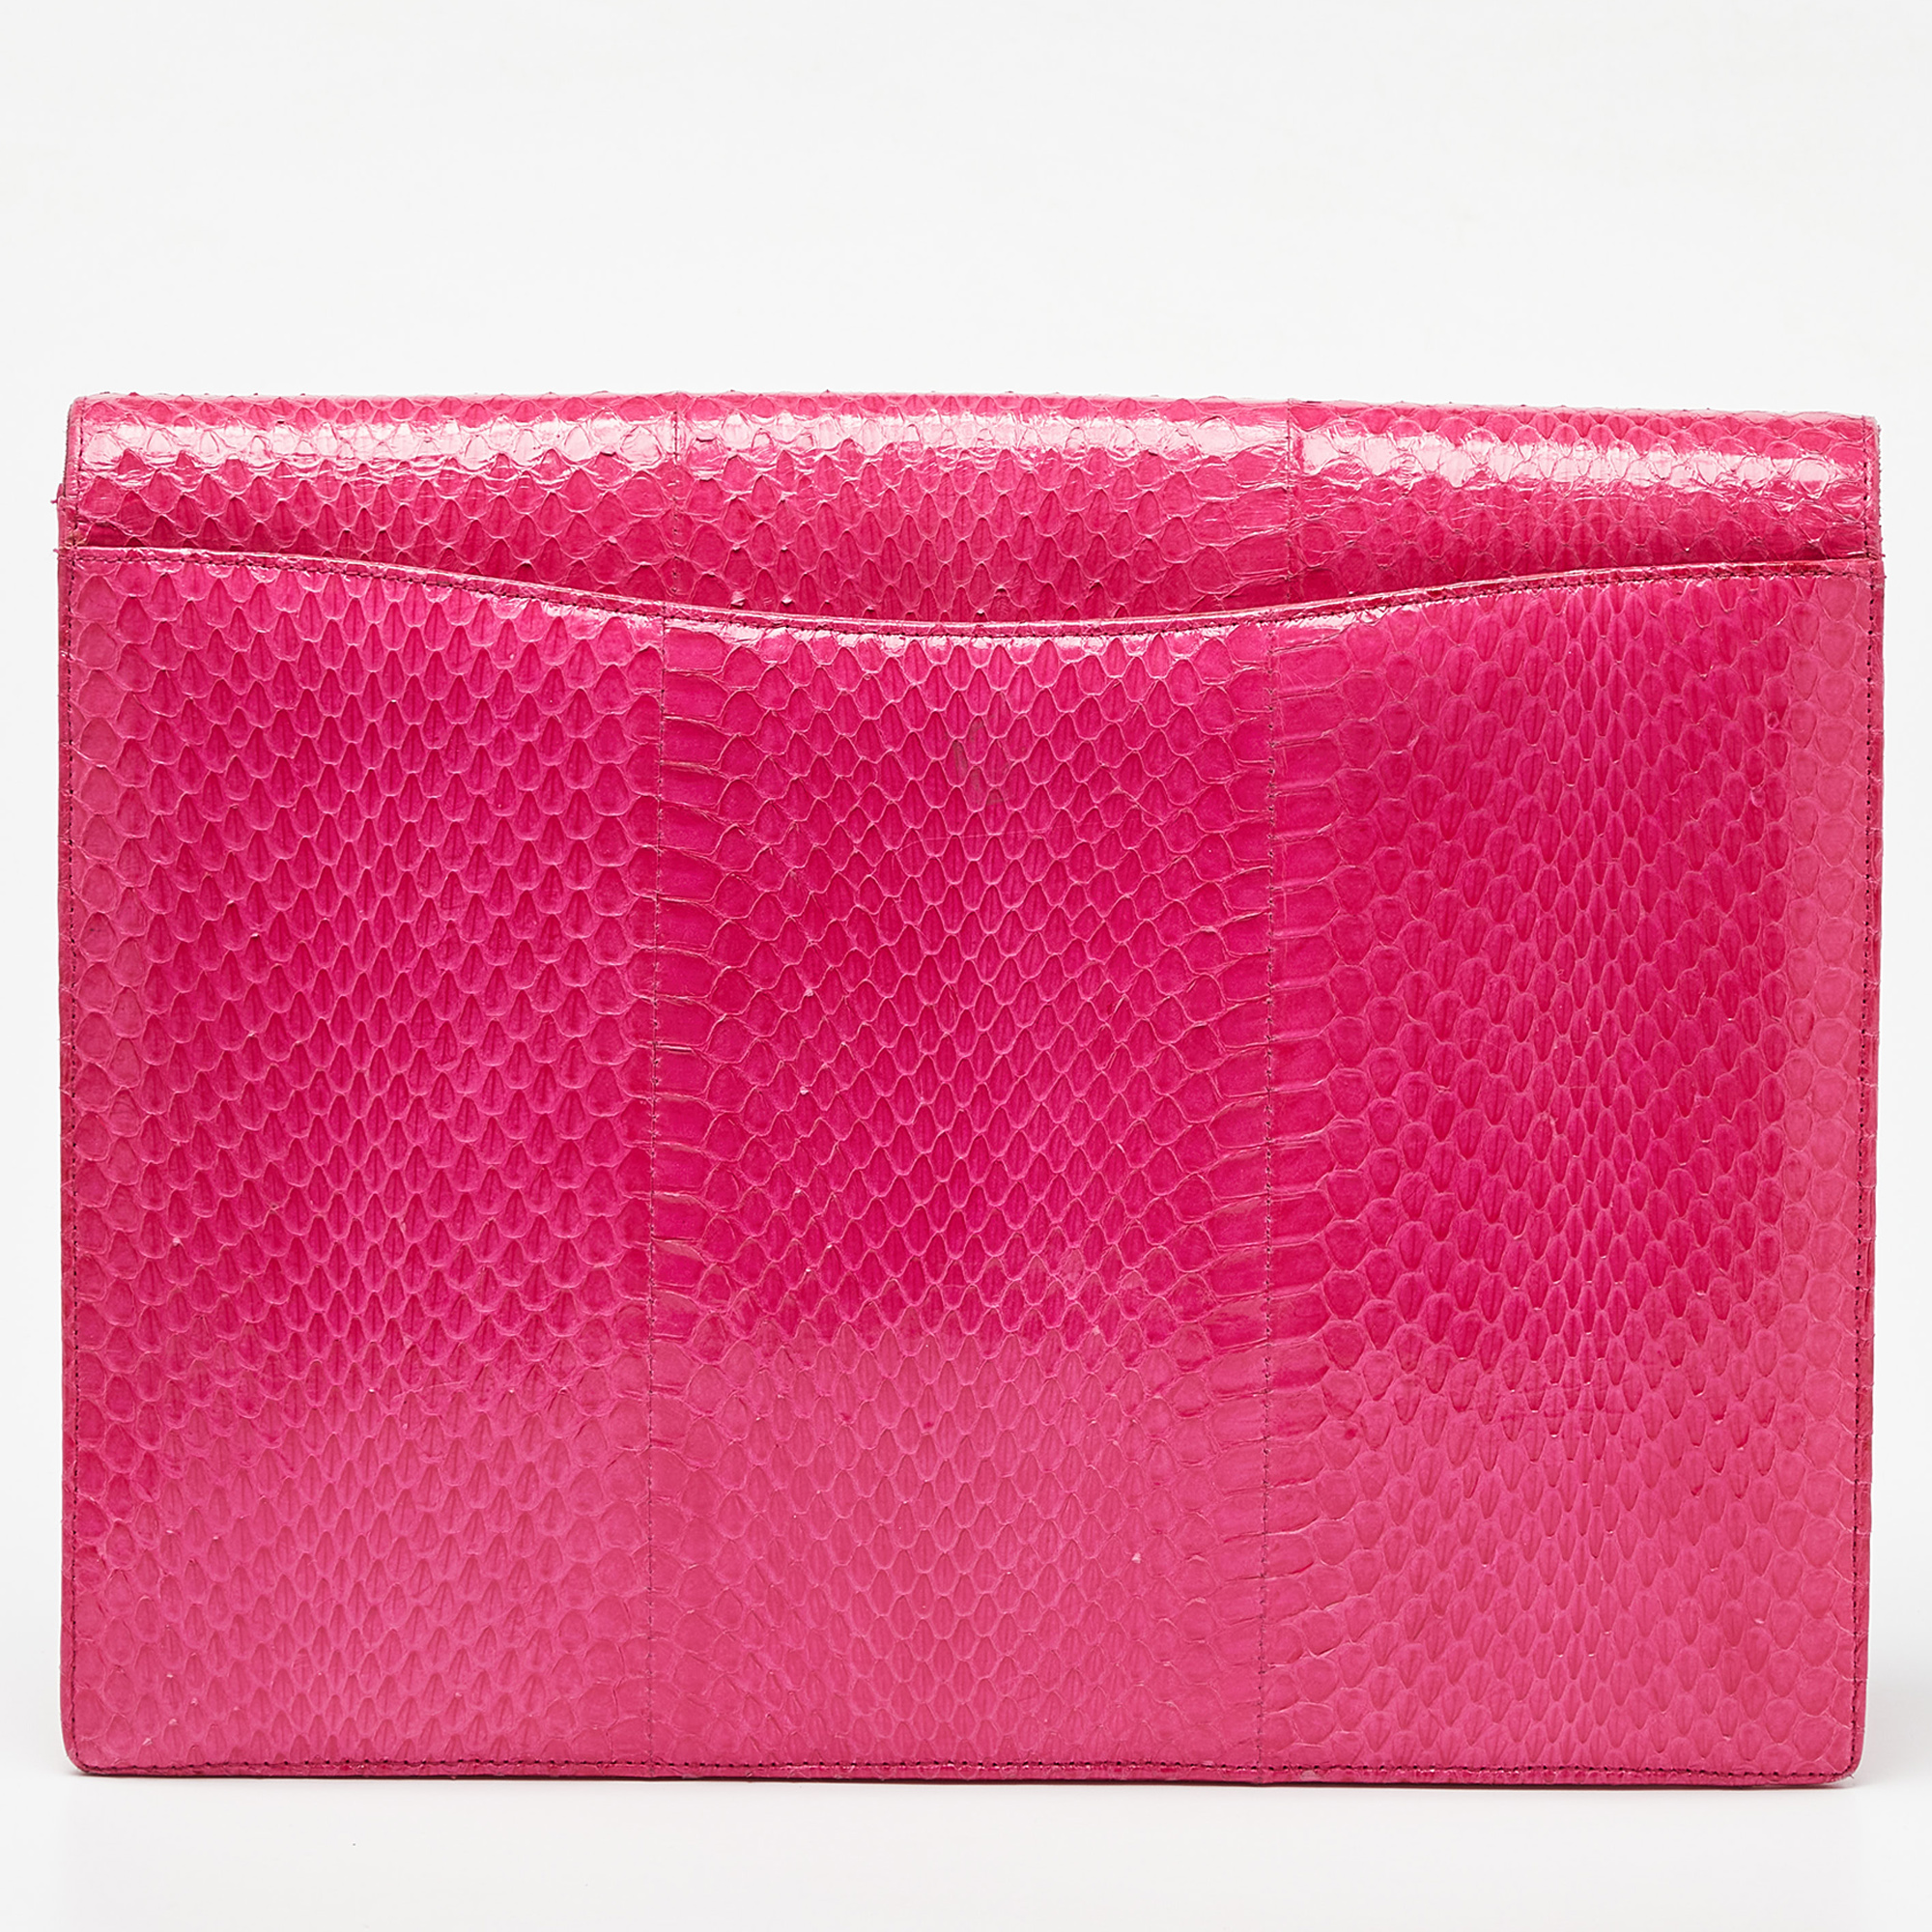 Oscar De La Renta Pink Watersnake Leather Small Grafton Clutch